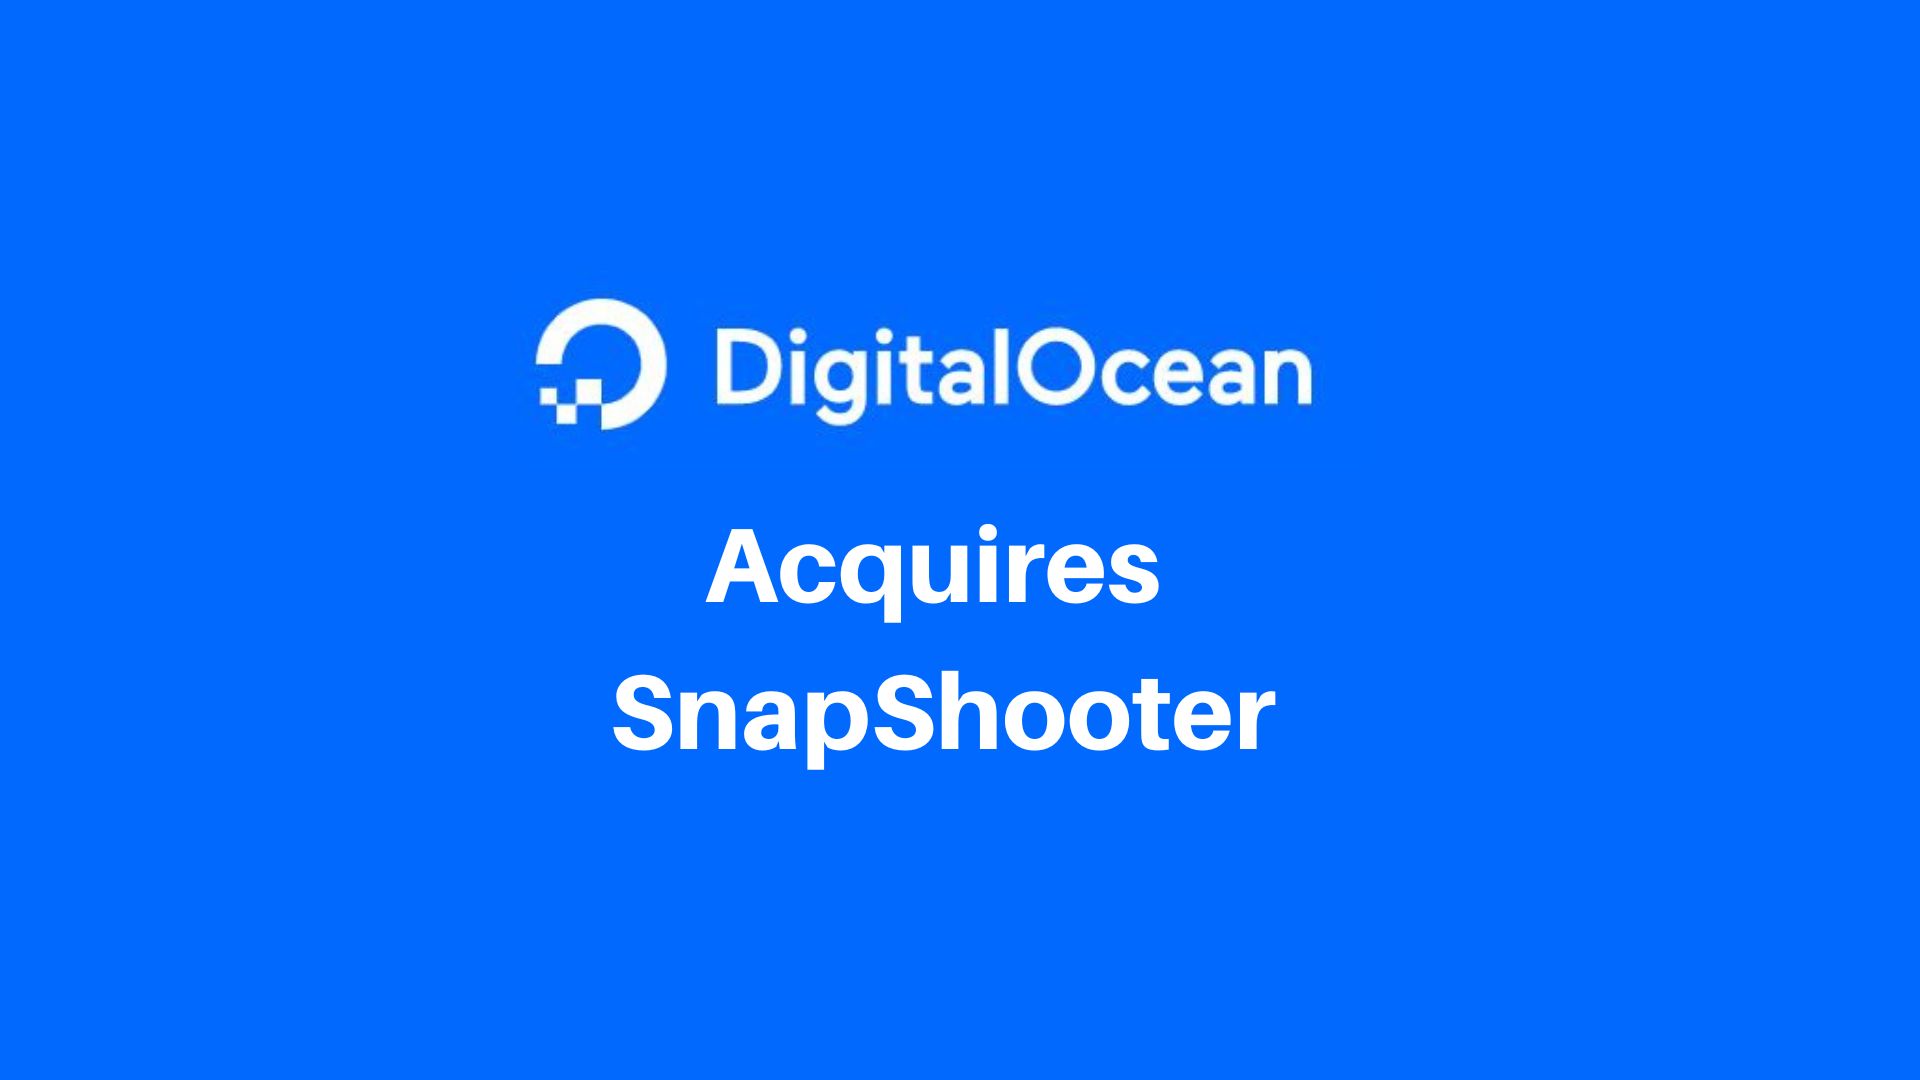 DigitalOcean acquires Snapshooter